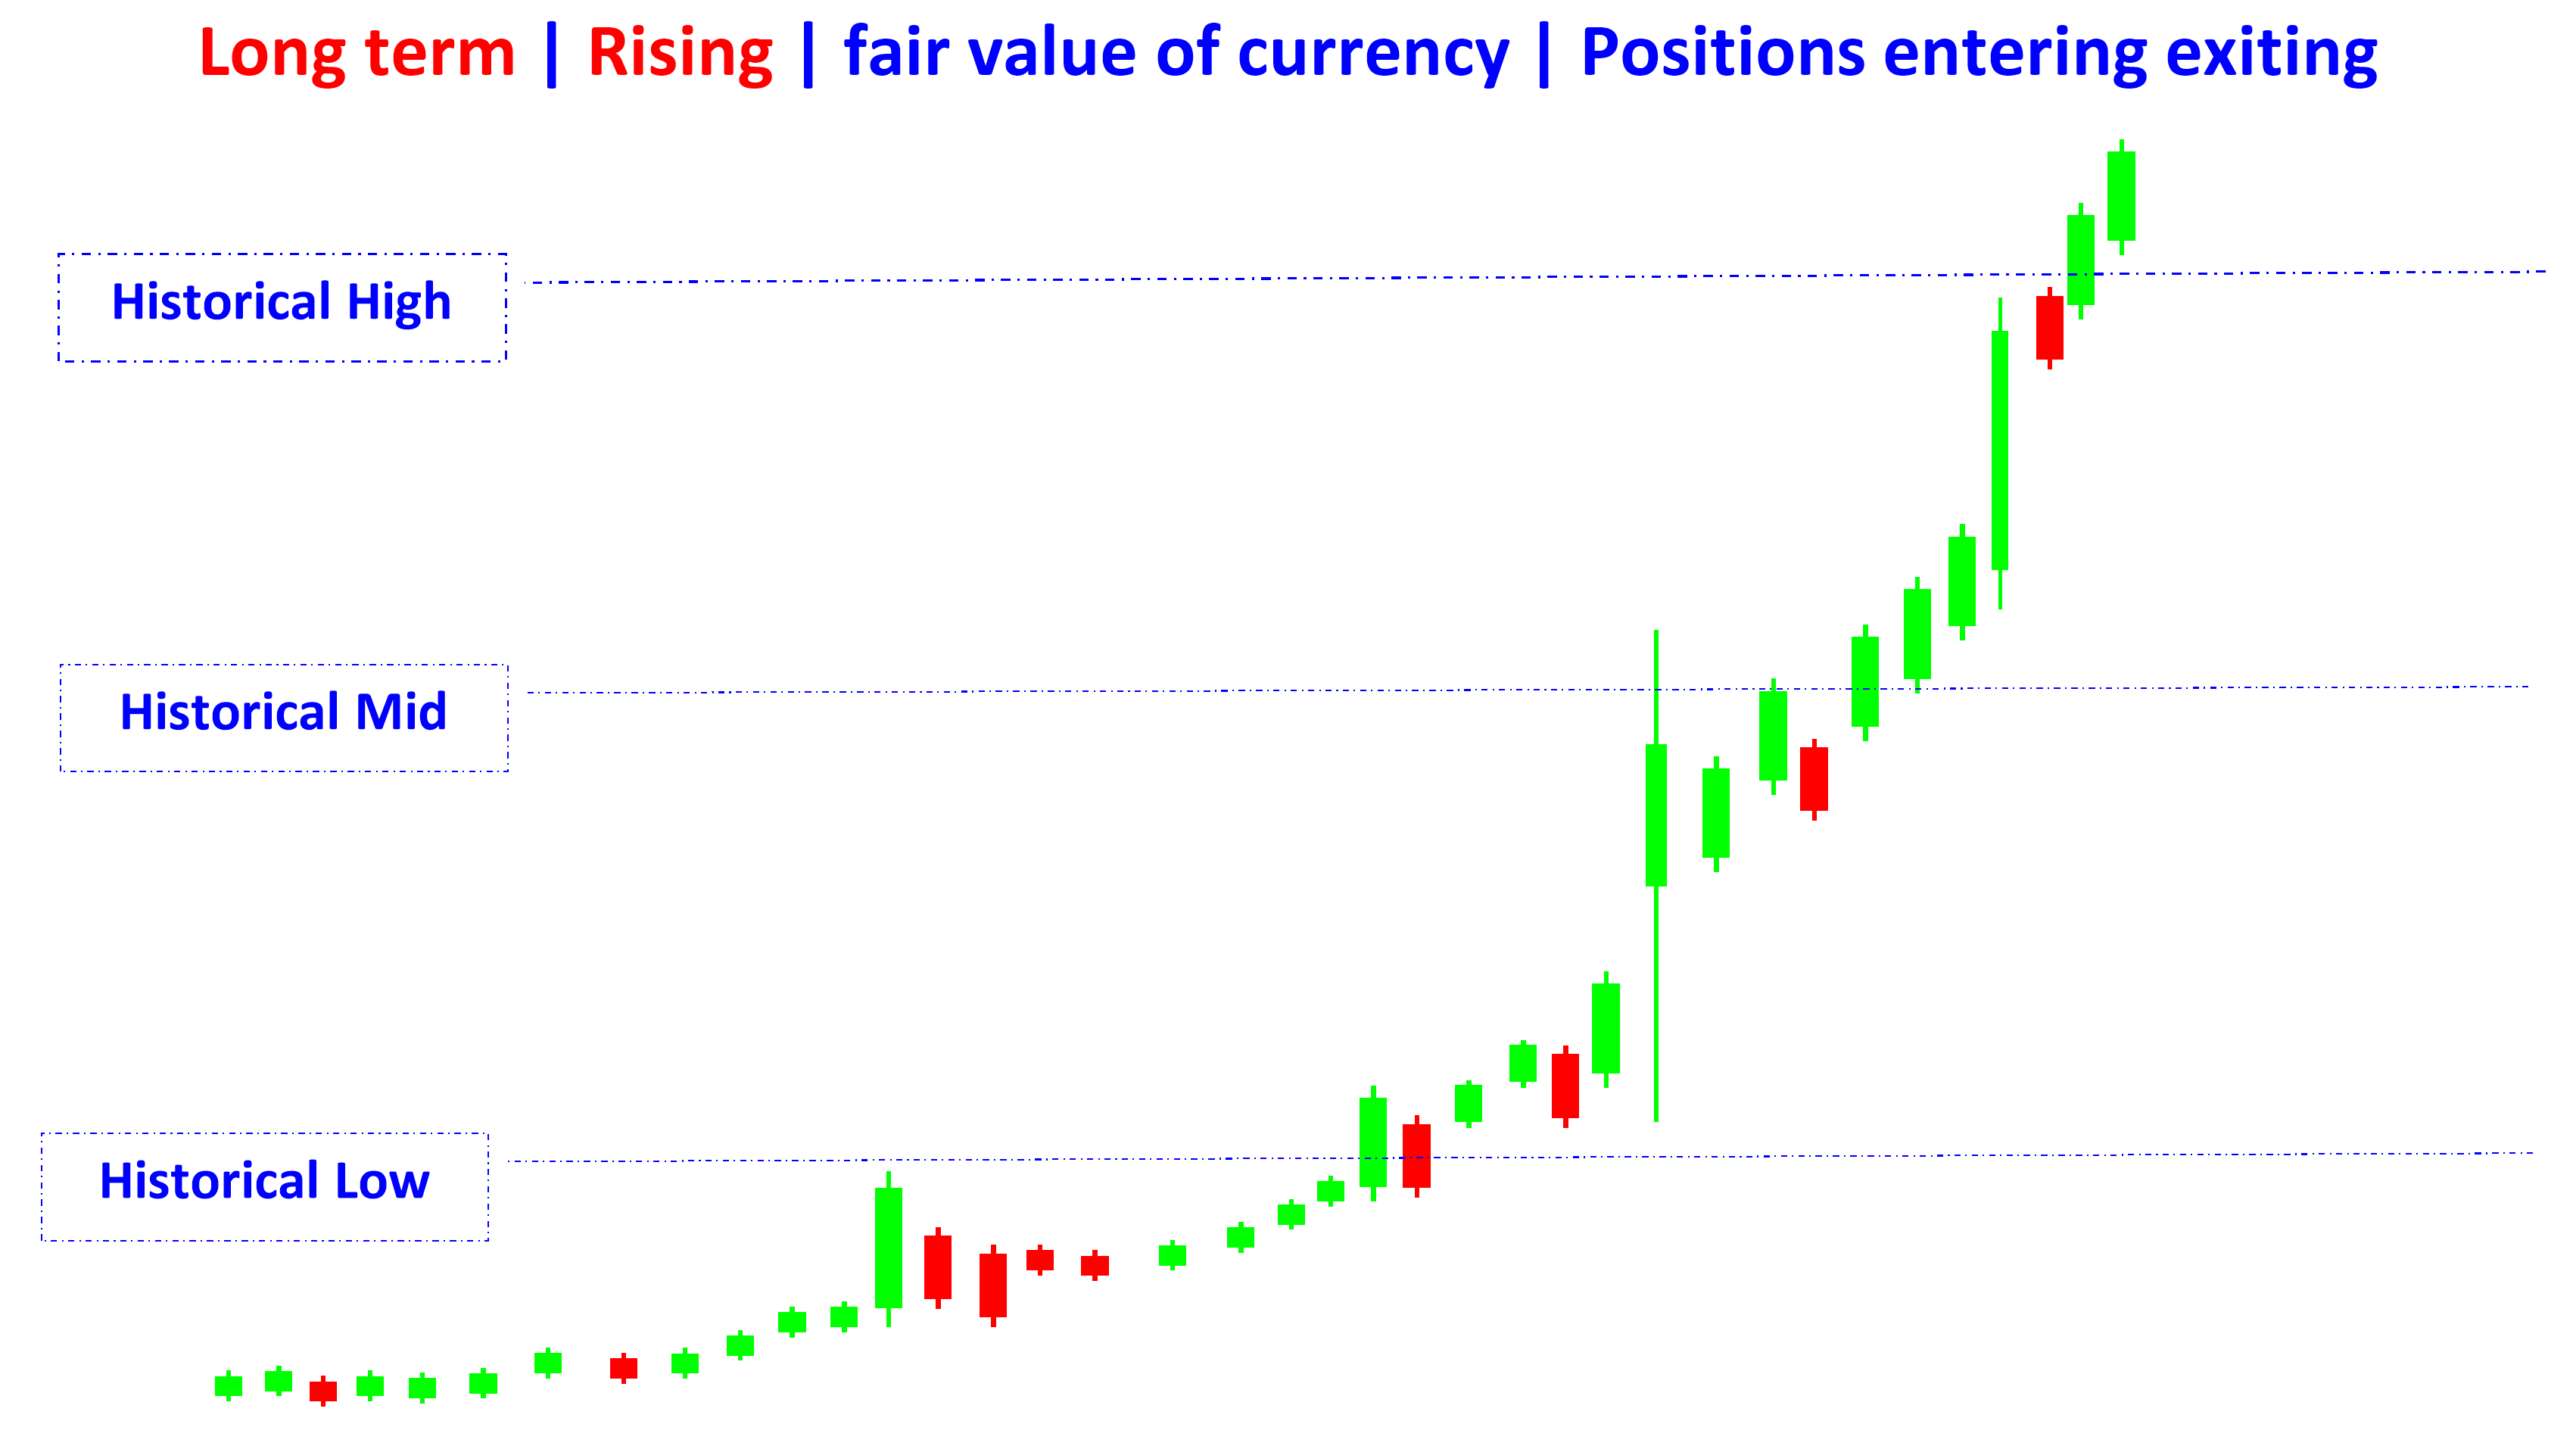 fair value indicators of currency in long terms rising en